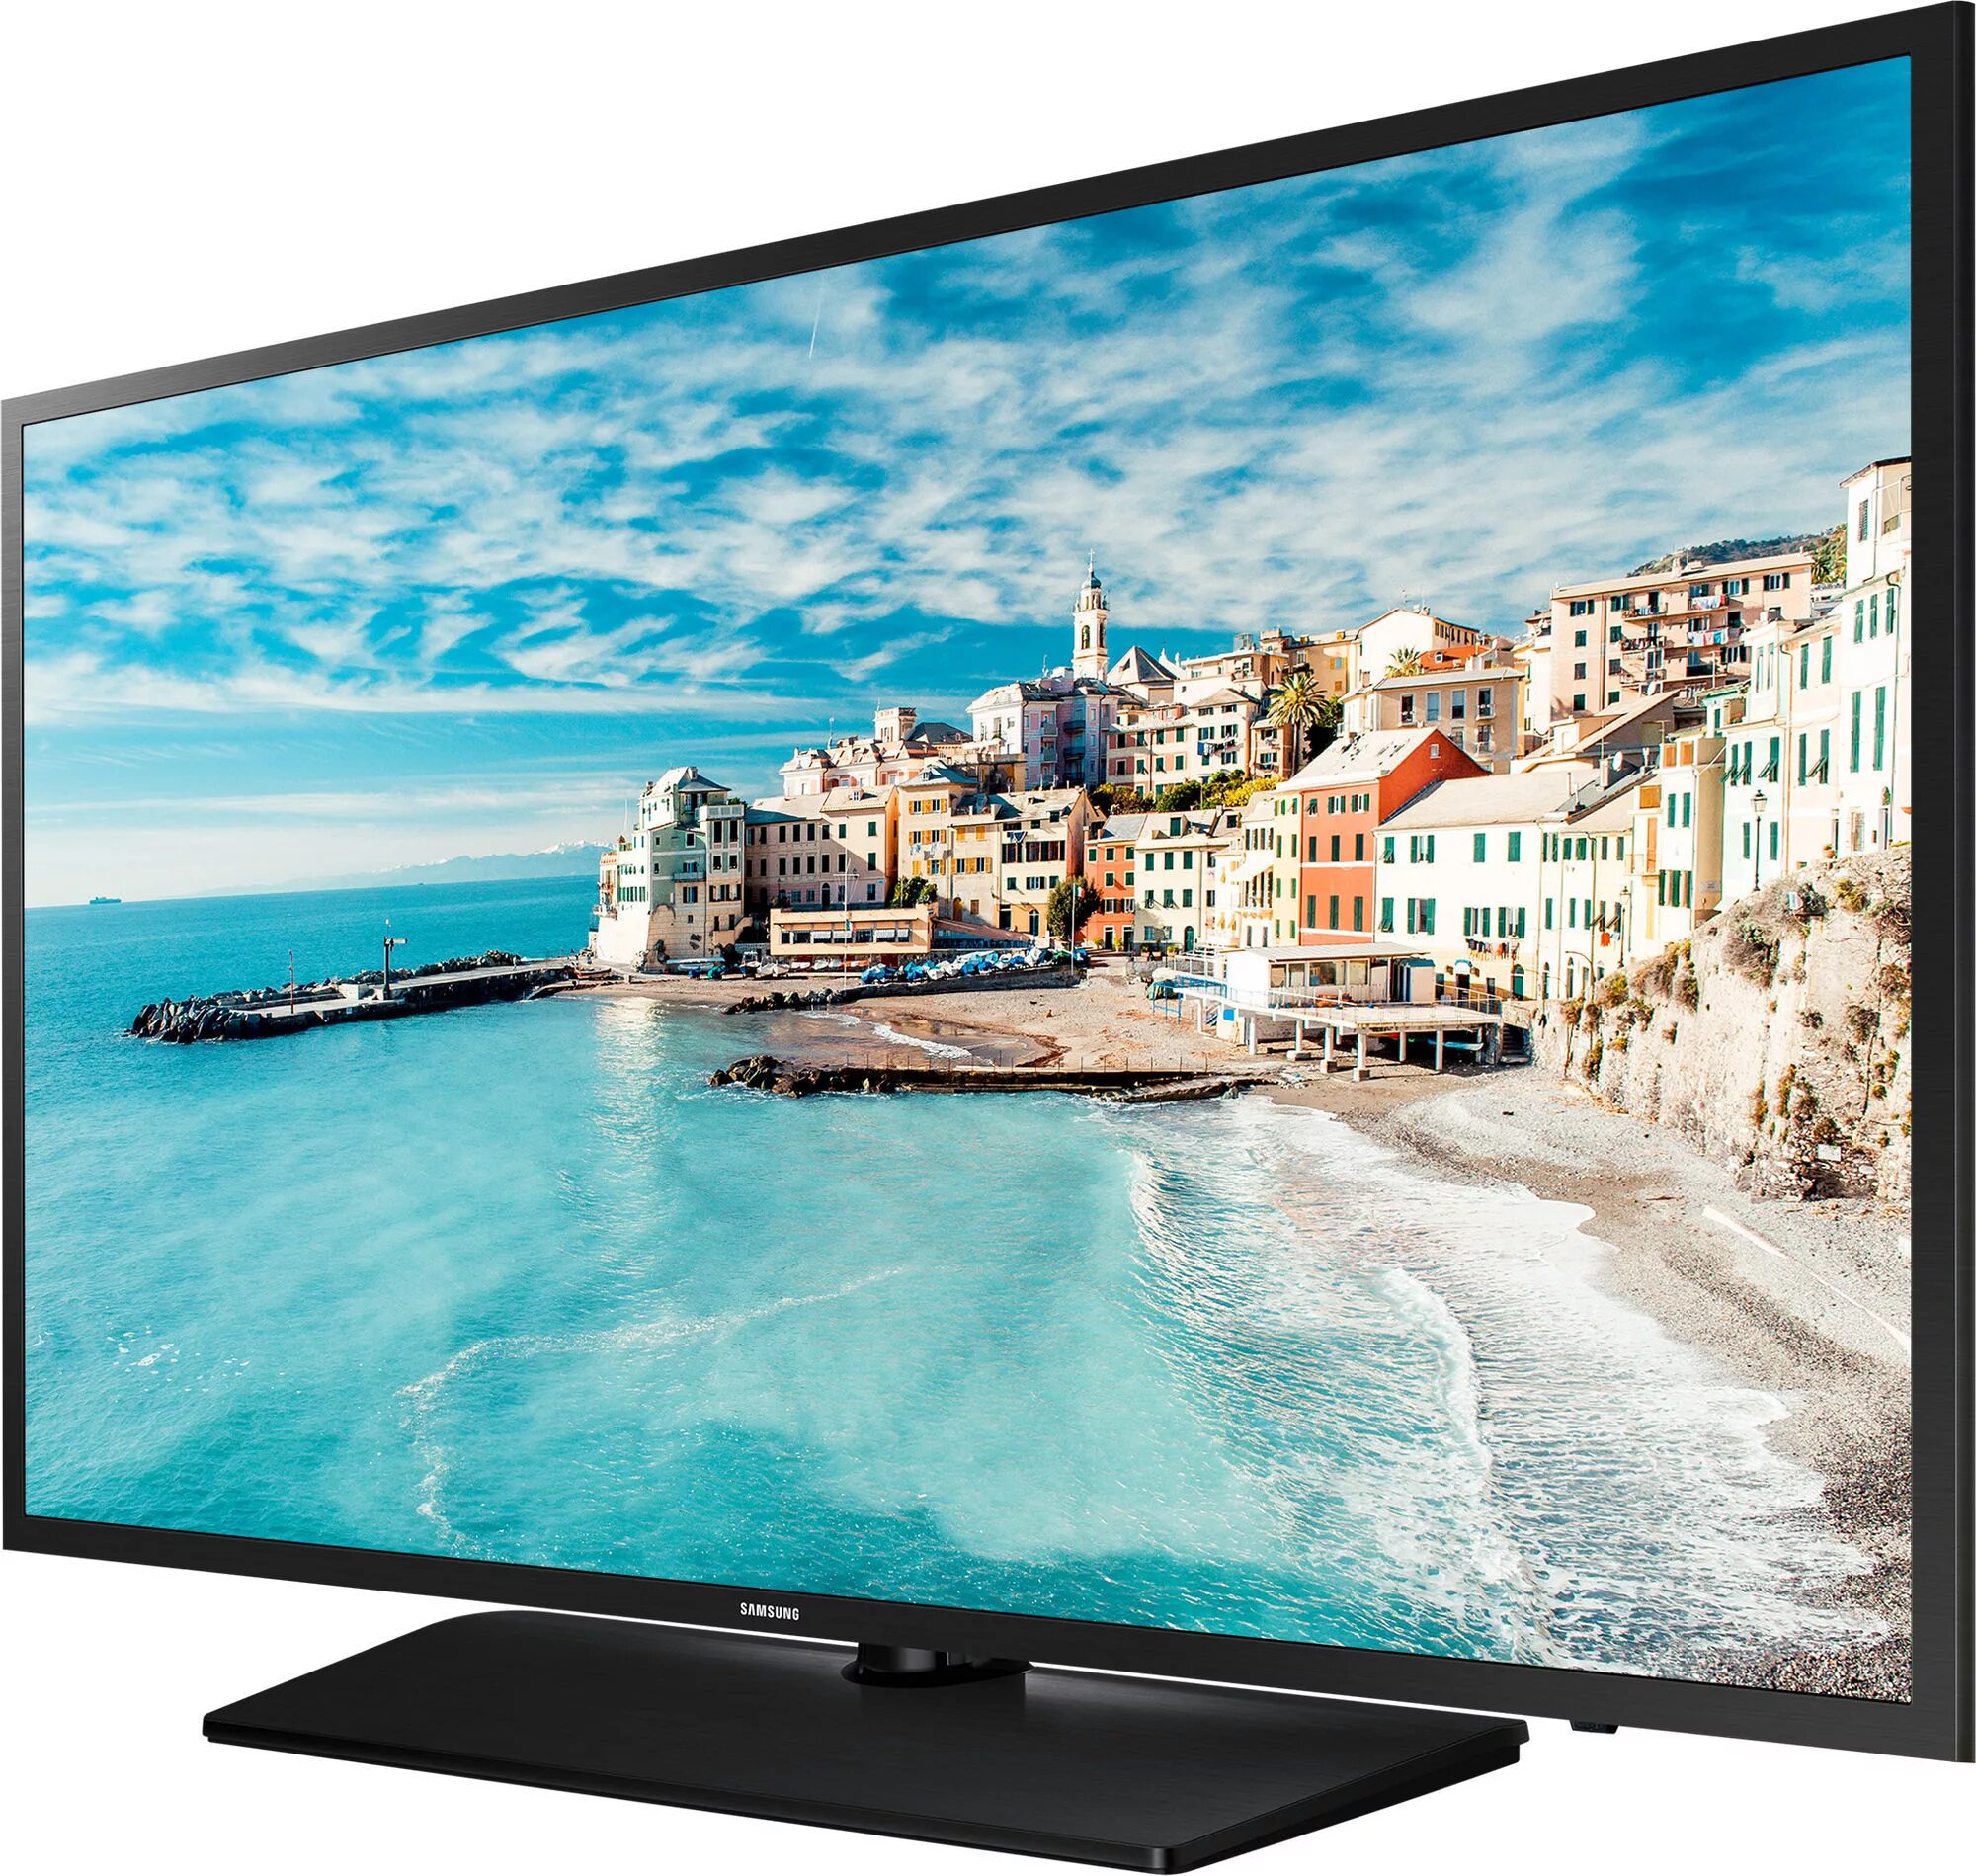 Телевизор Samsung 32n4500. Телевизор самсунг 32n 5000. Телевизор Samsung 32n4000. Самсунг 32.d20yb.